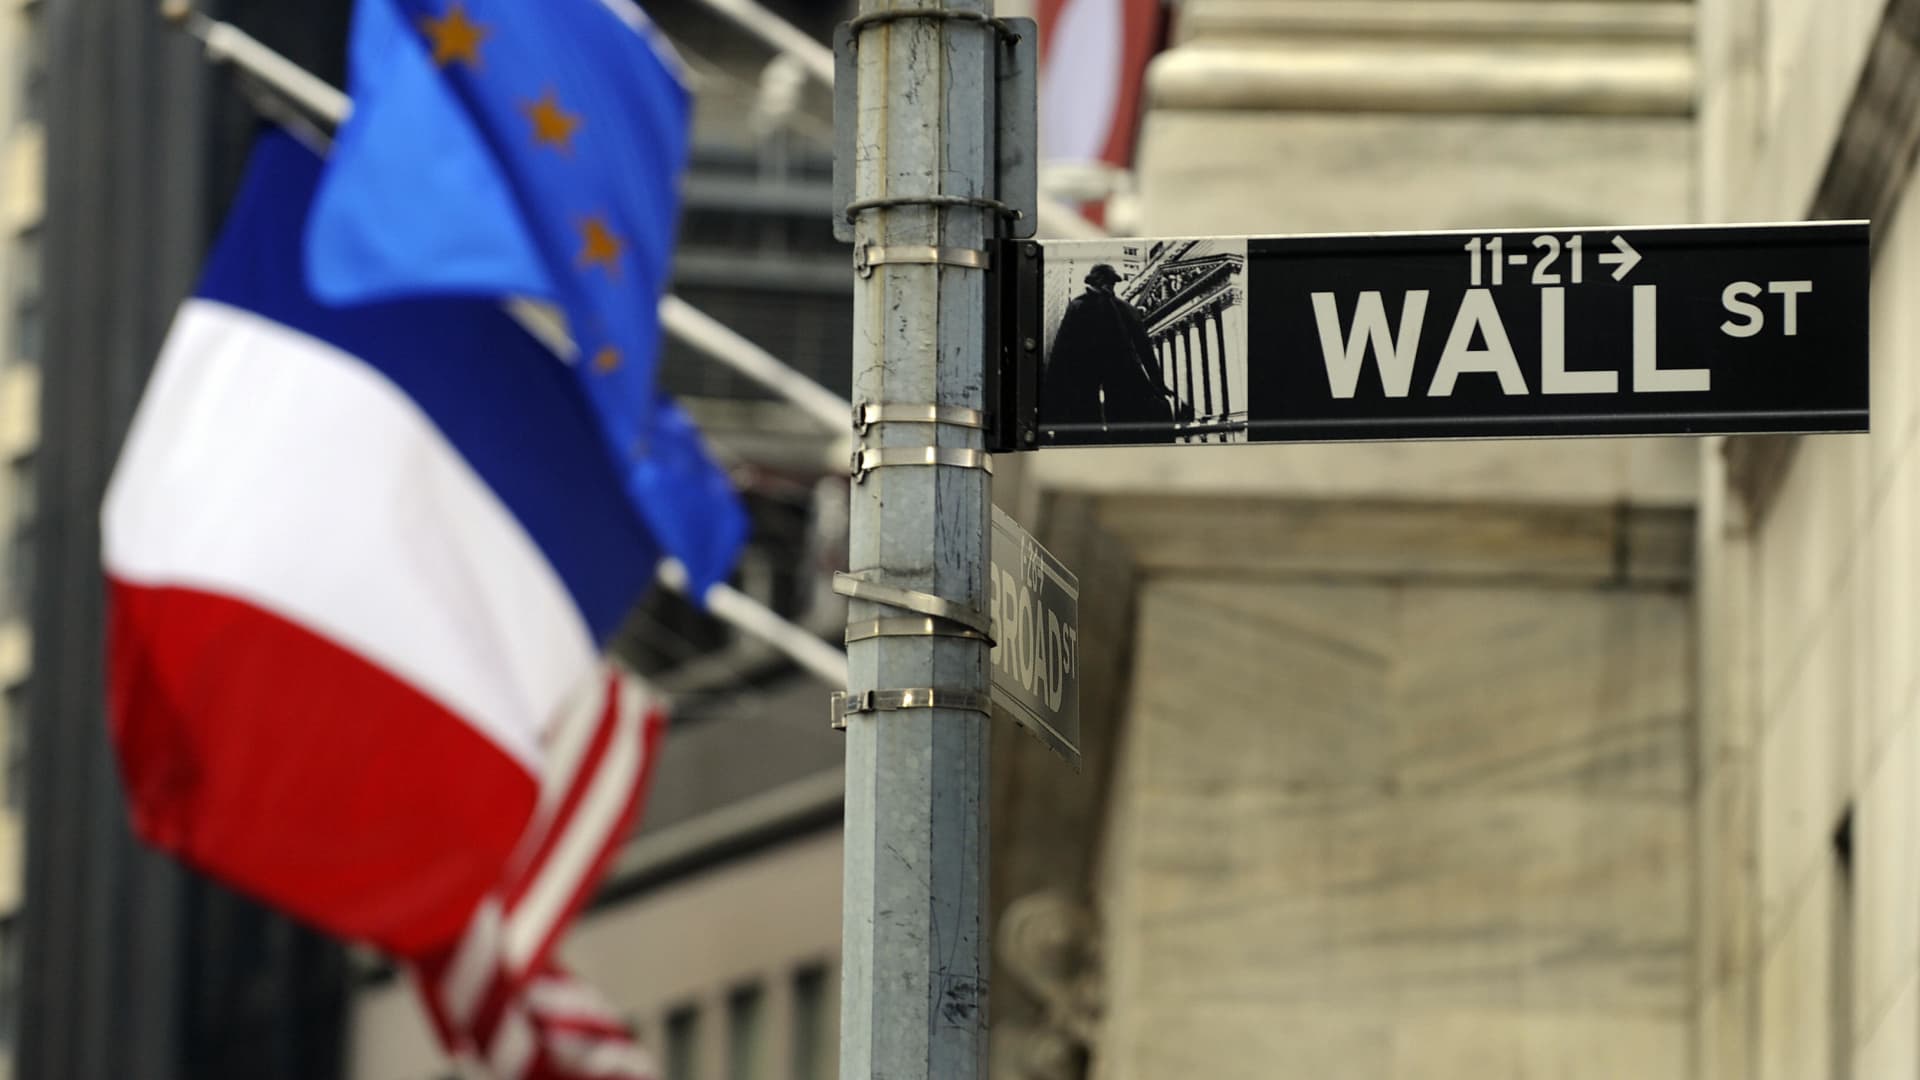 Predictions from Wall Street, Goldman Sachs, Citi, SocGen